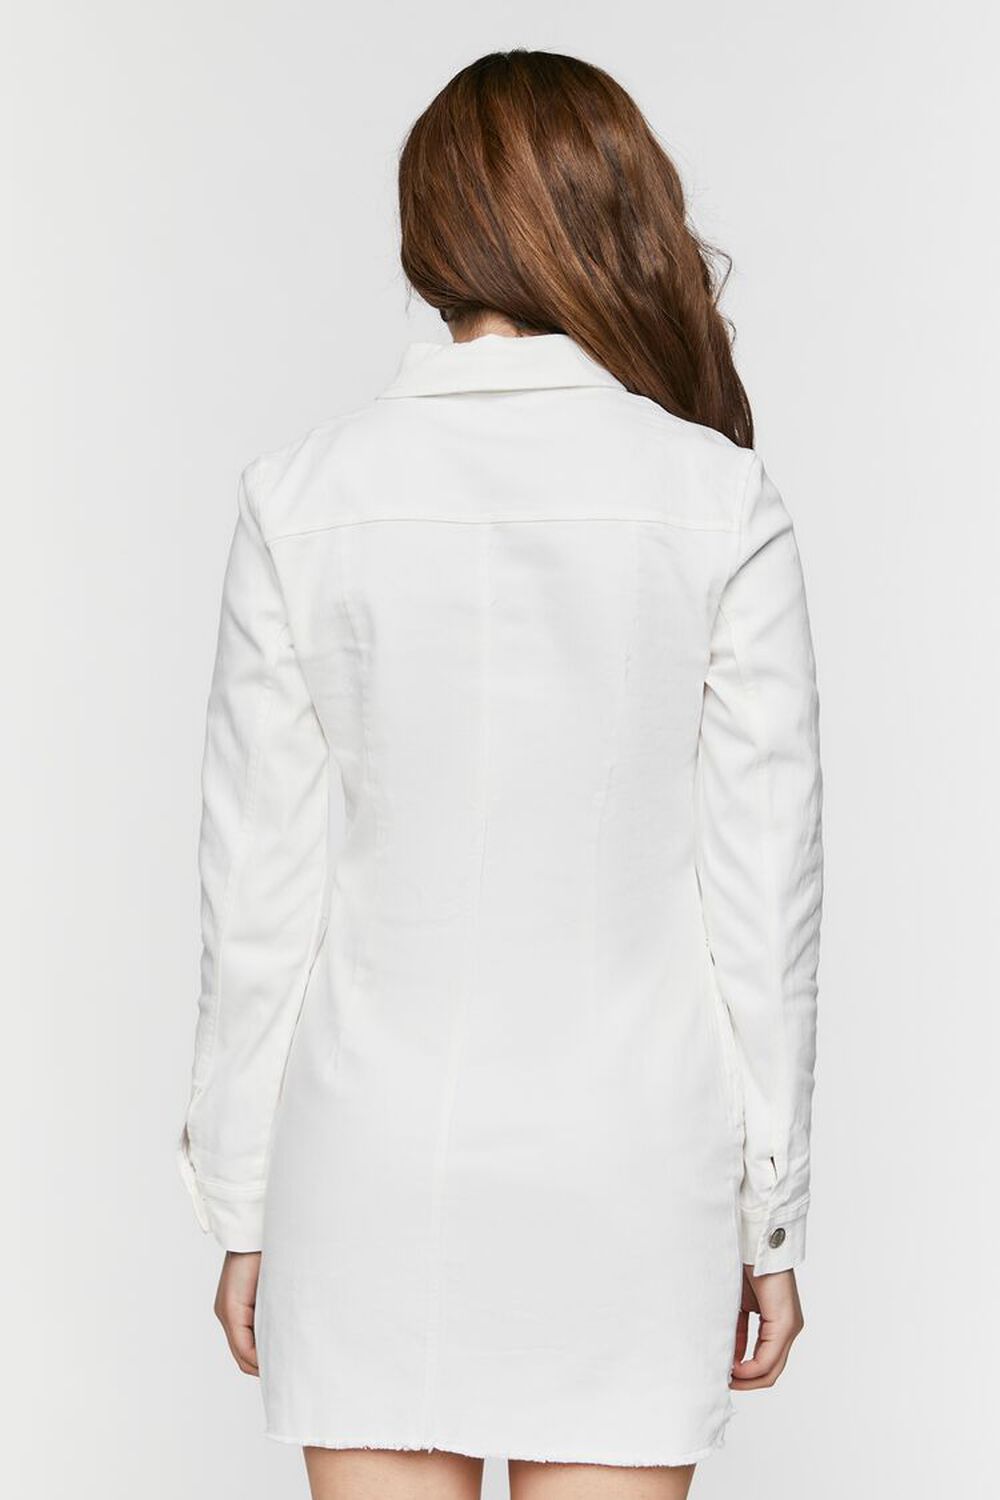 WHITE Distressed Denim Mini Shirt Dress, image 3